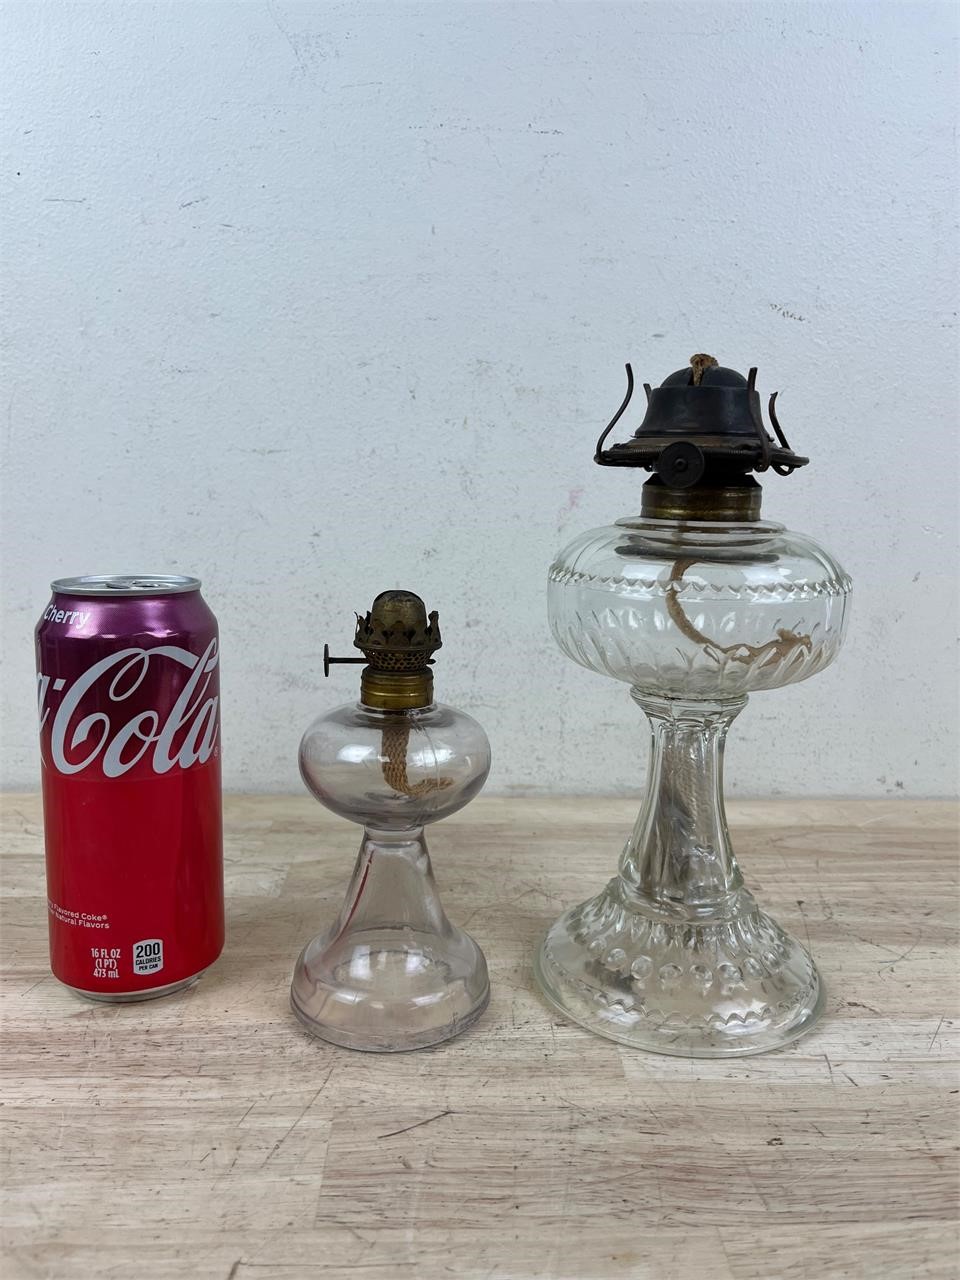 Two antique oil lamps